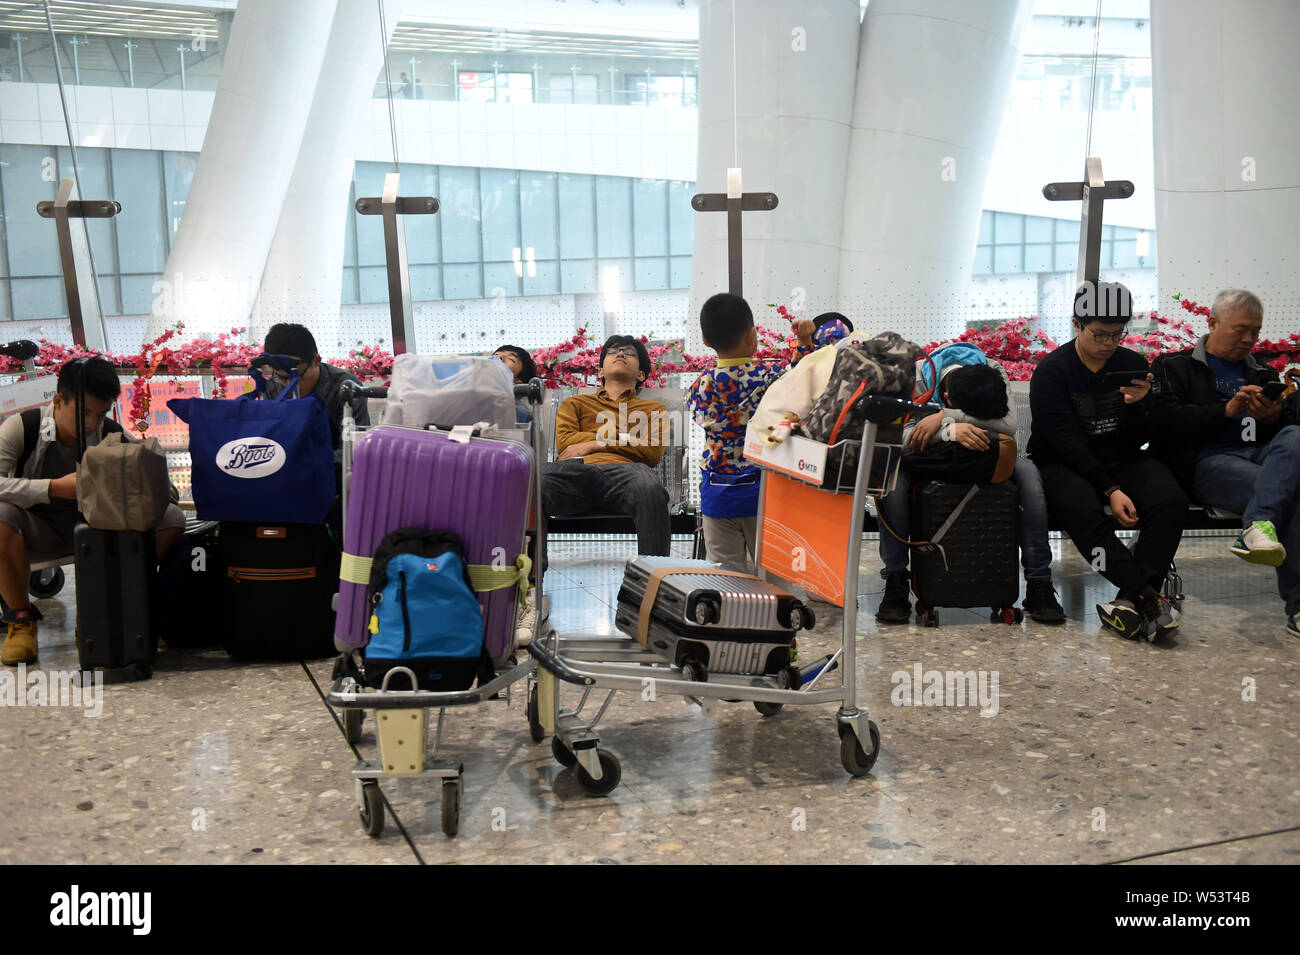 Passagiere warten auf ihre Züge während des Frühlings Festival reisen Rush, auch als 'Chunyun', an der Hong Kong West Kowloon Station der Guangzh bekannt Stockfoto